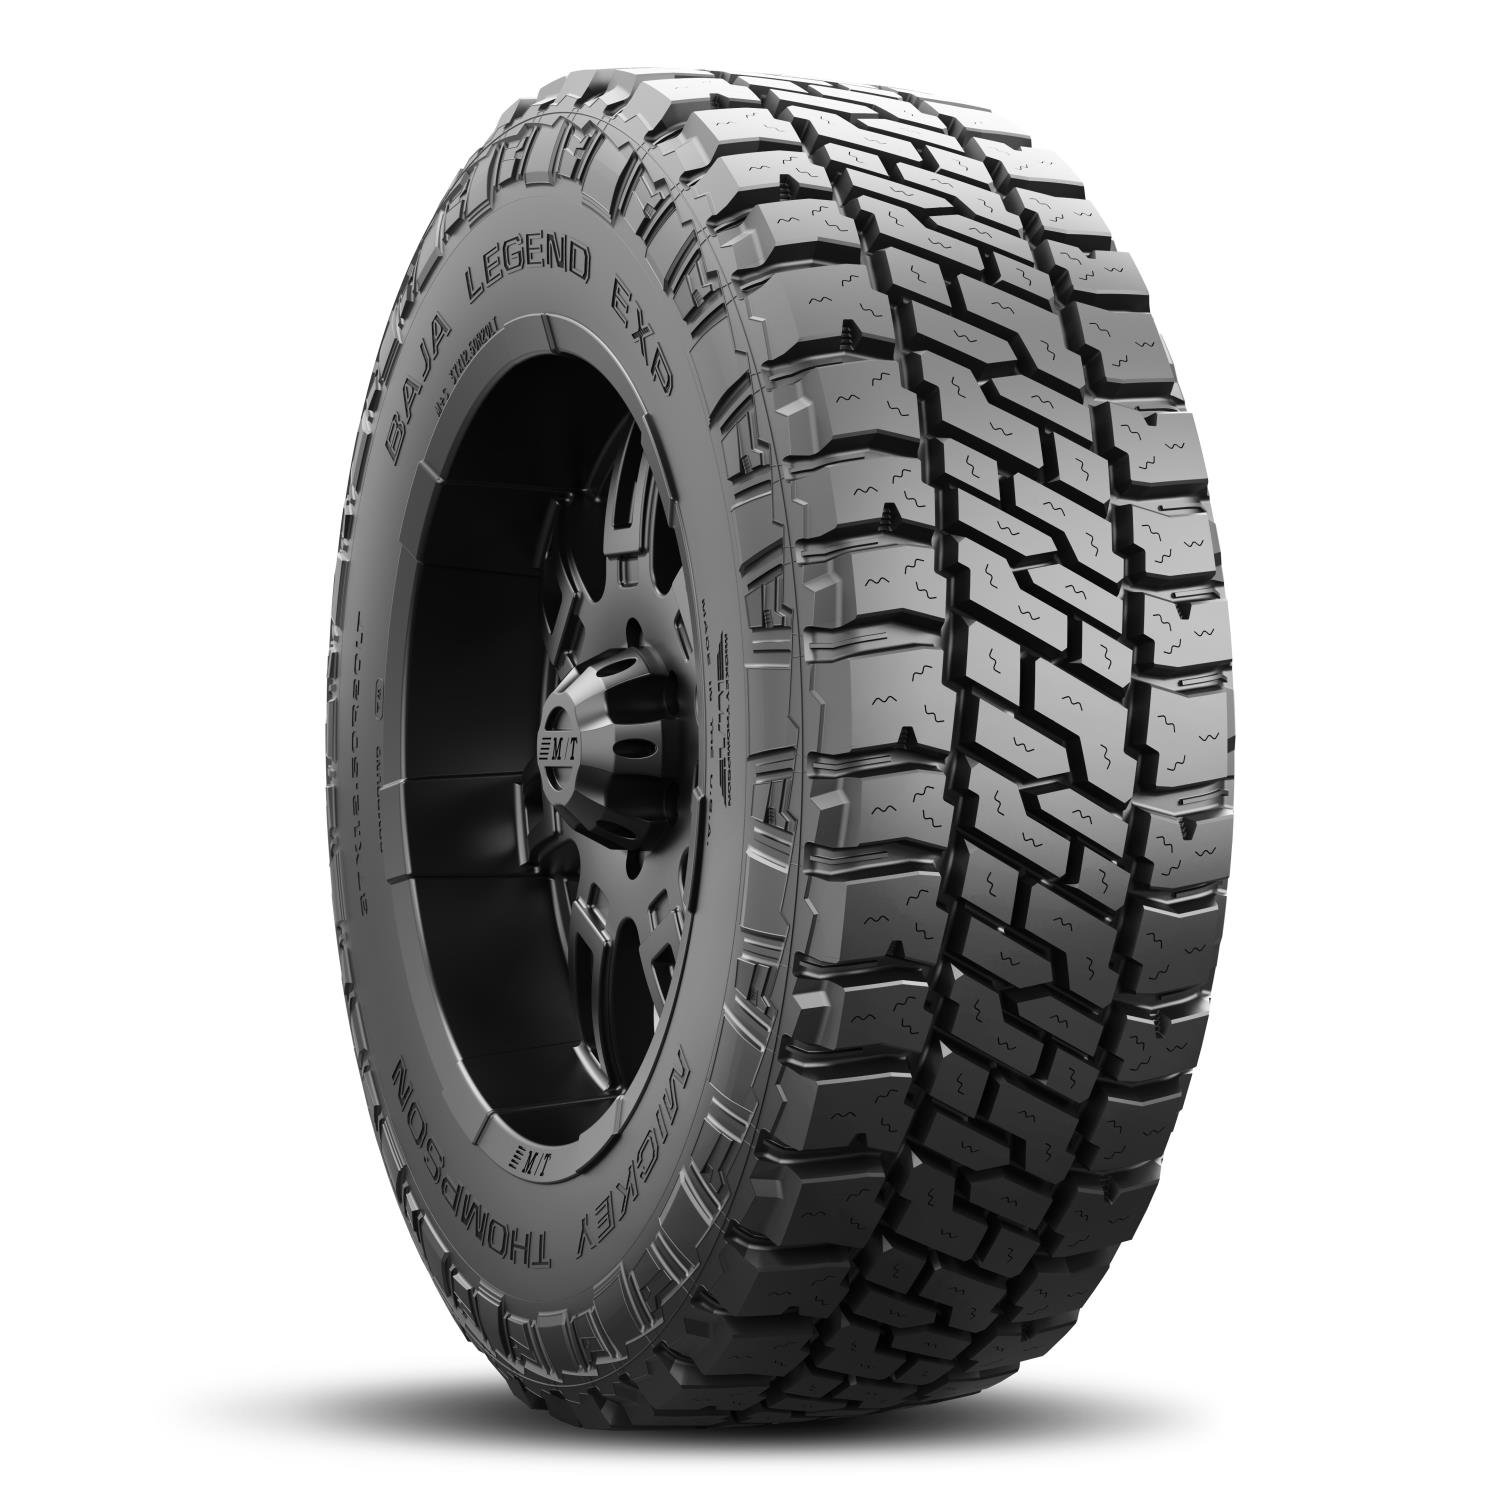 Baja Legend EXP Tire LT275/55R20